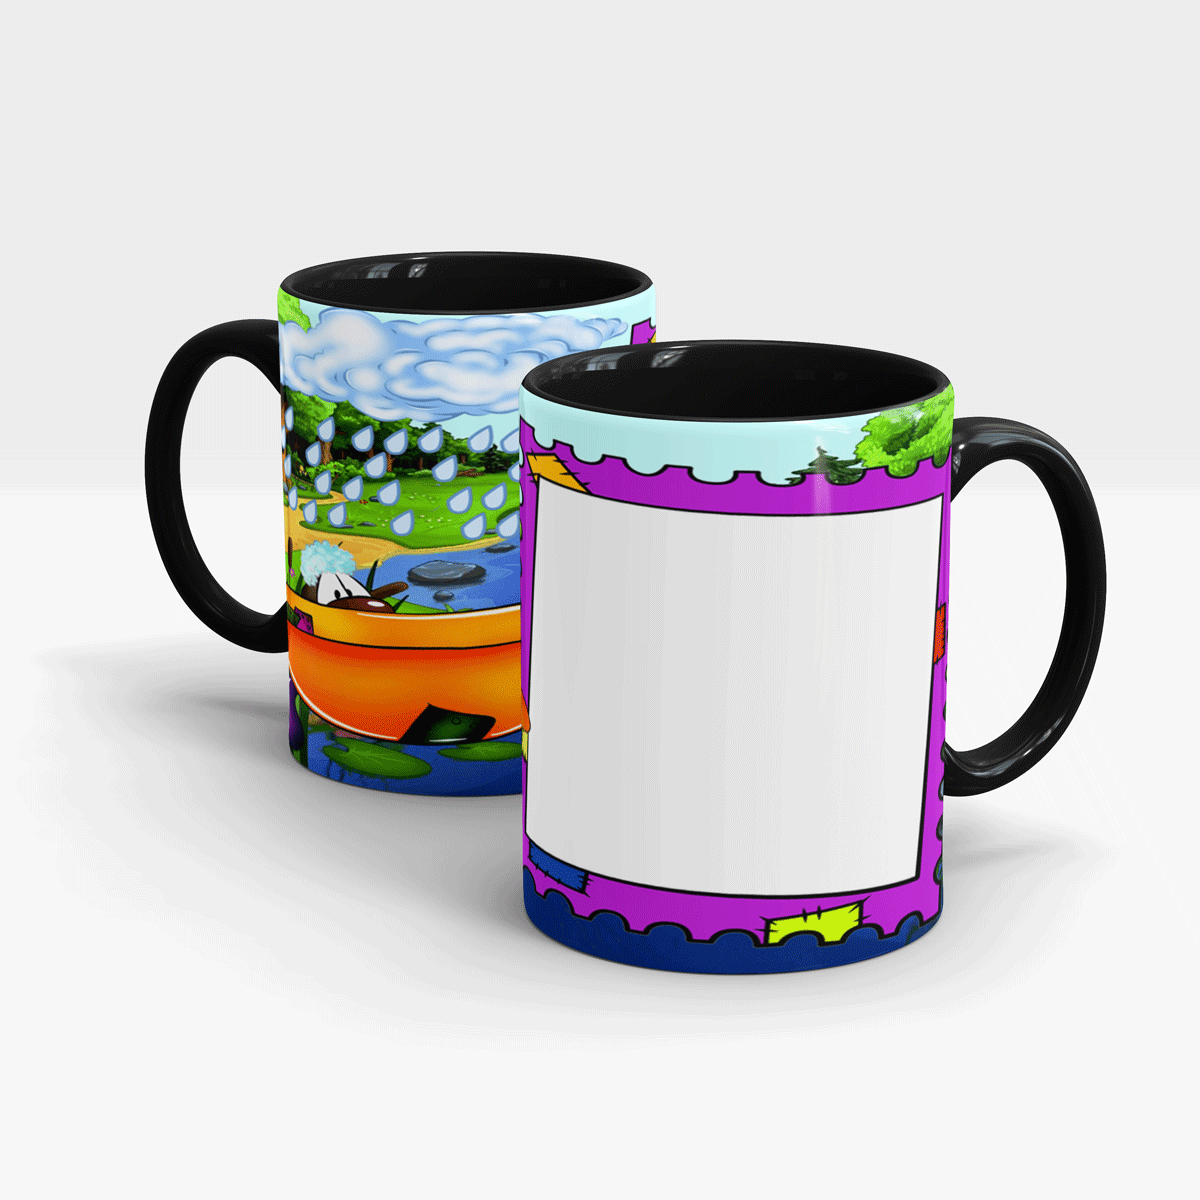 custom-printed-mug-for-kids-design-your-own